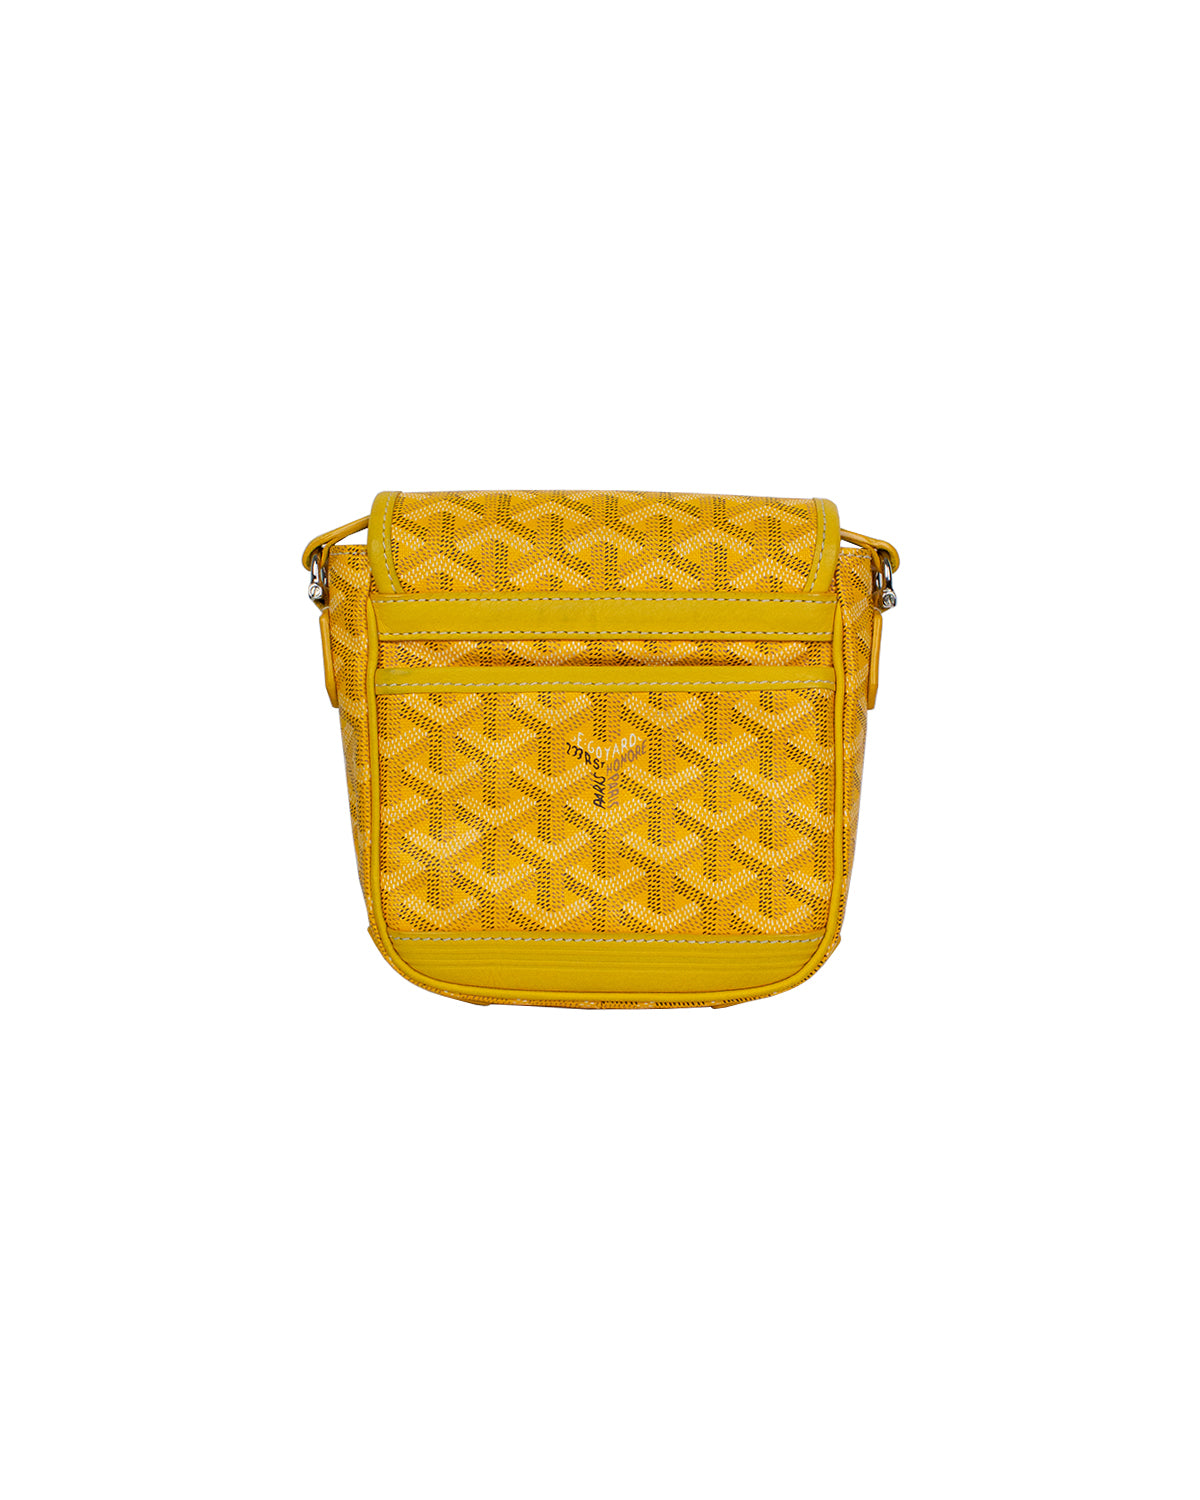 goyard suitcase yellow